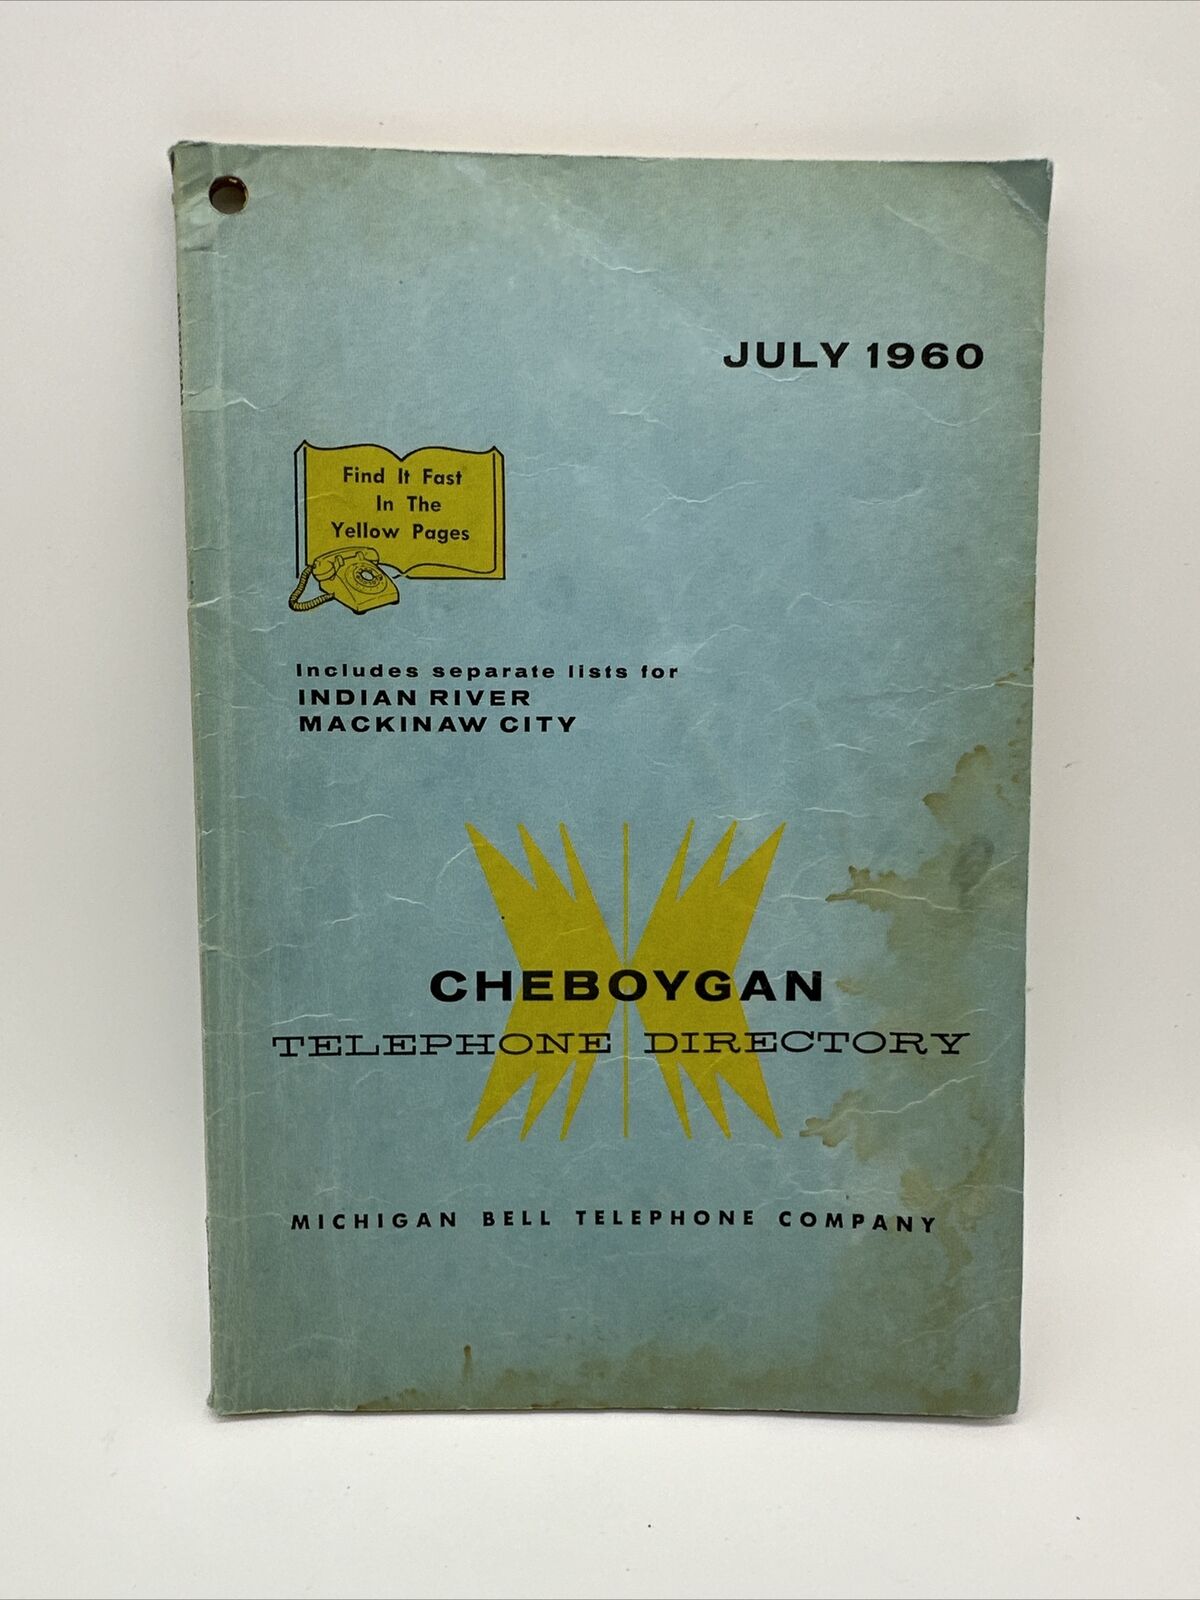 RARE 1960 Michigan Bell Cheboygan MI TELEPHONE DIRECTORY phone book 5 digit #'s